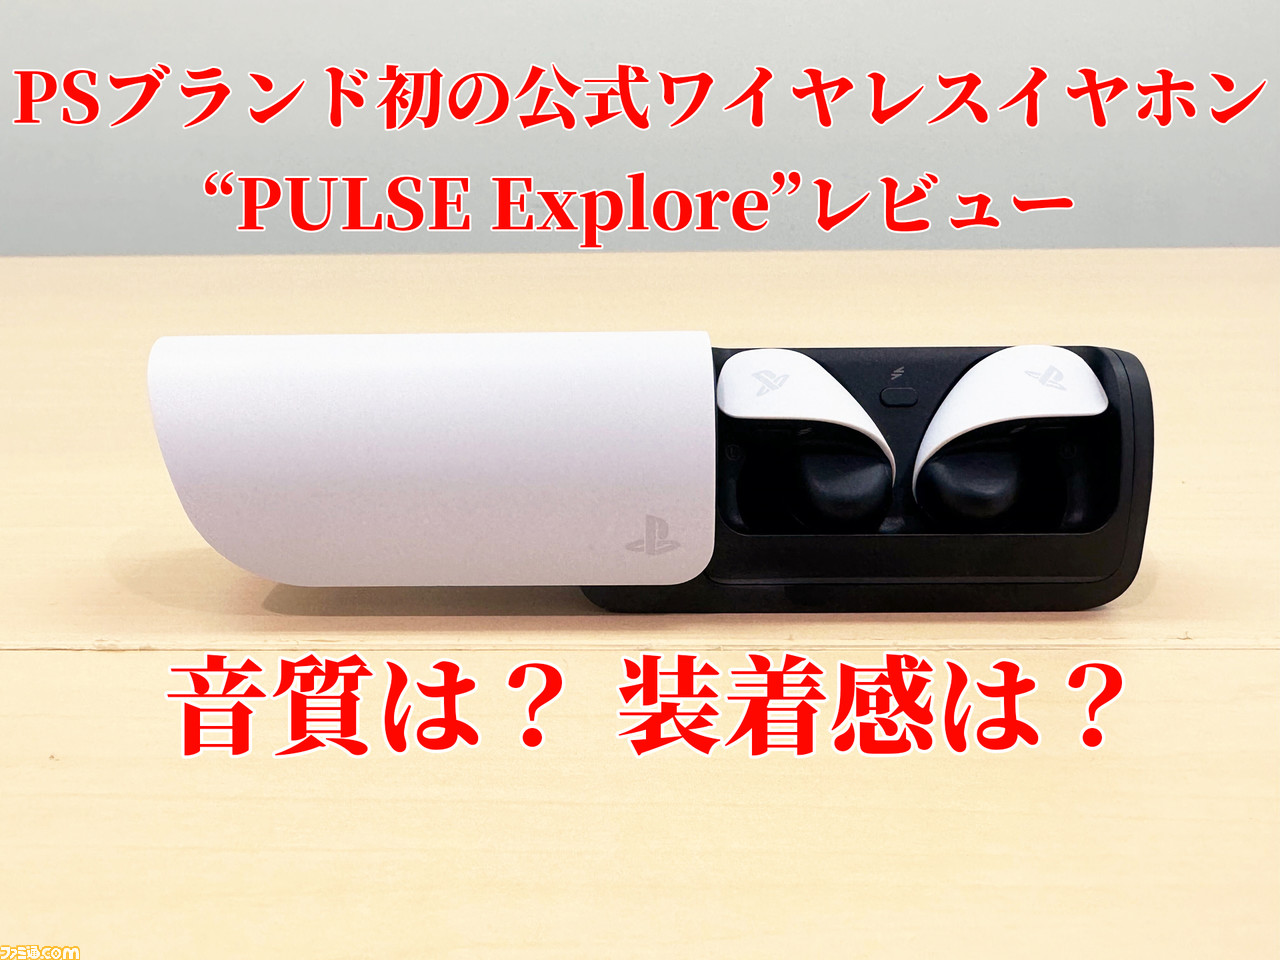 PS5 PULSE Explore ワイヤレスイヤホン CFI-ZWE1J 超ポイントアップ祭